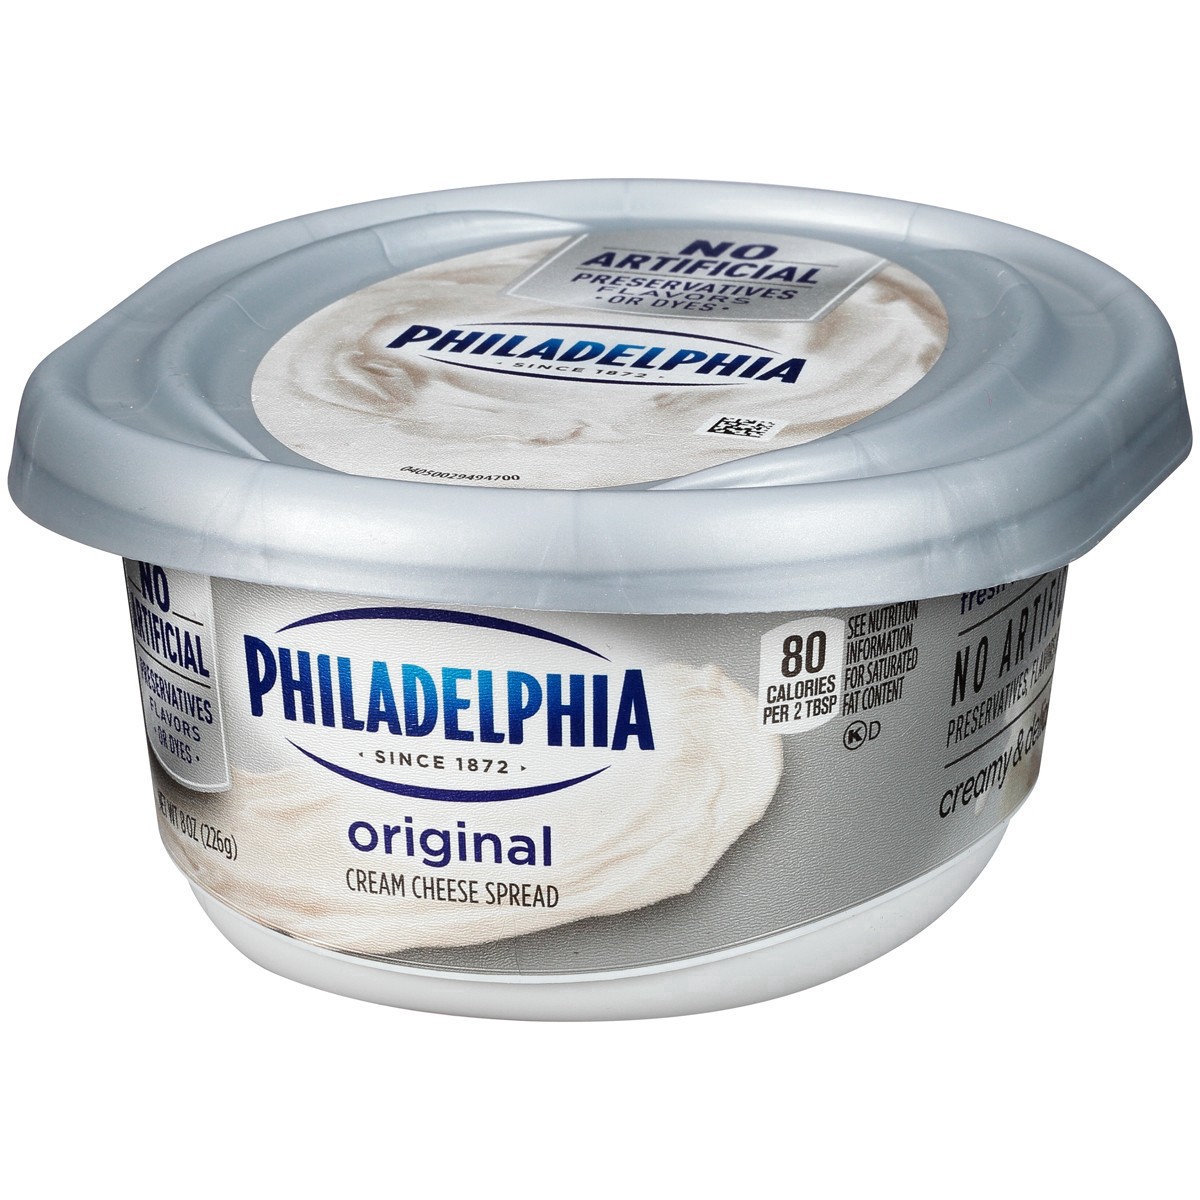 slide 25 of 67, Philadelphia Original Cream Cheese Spread, 8 oz